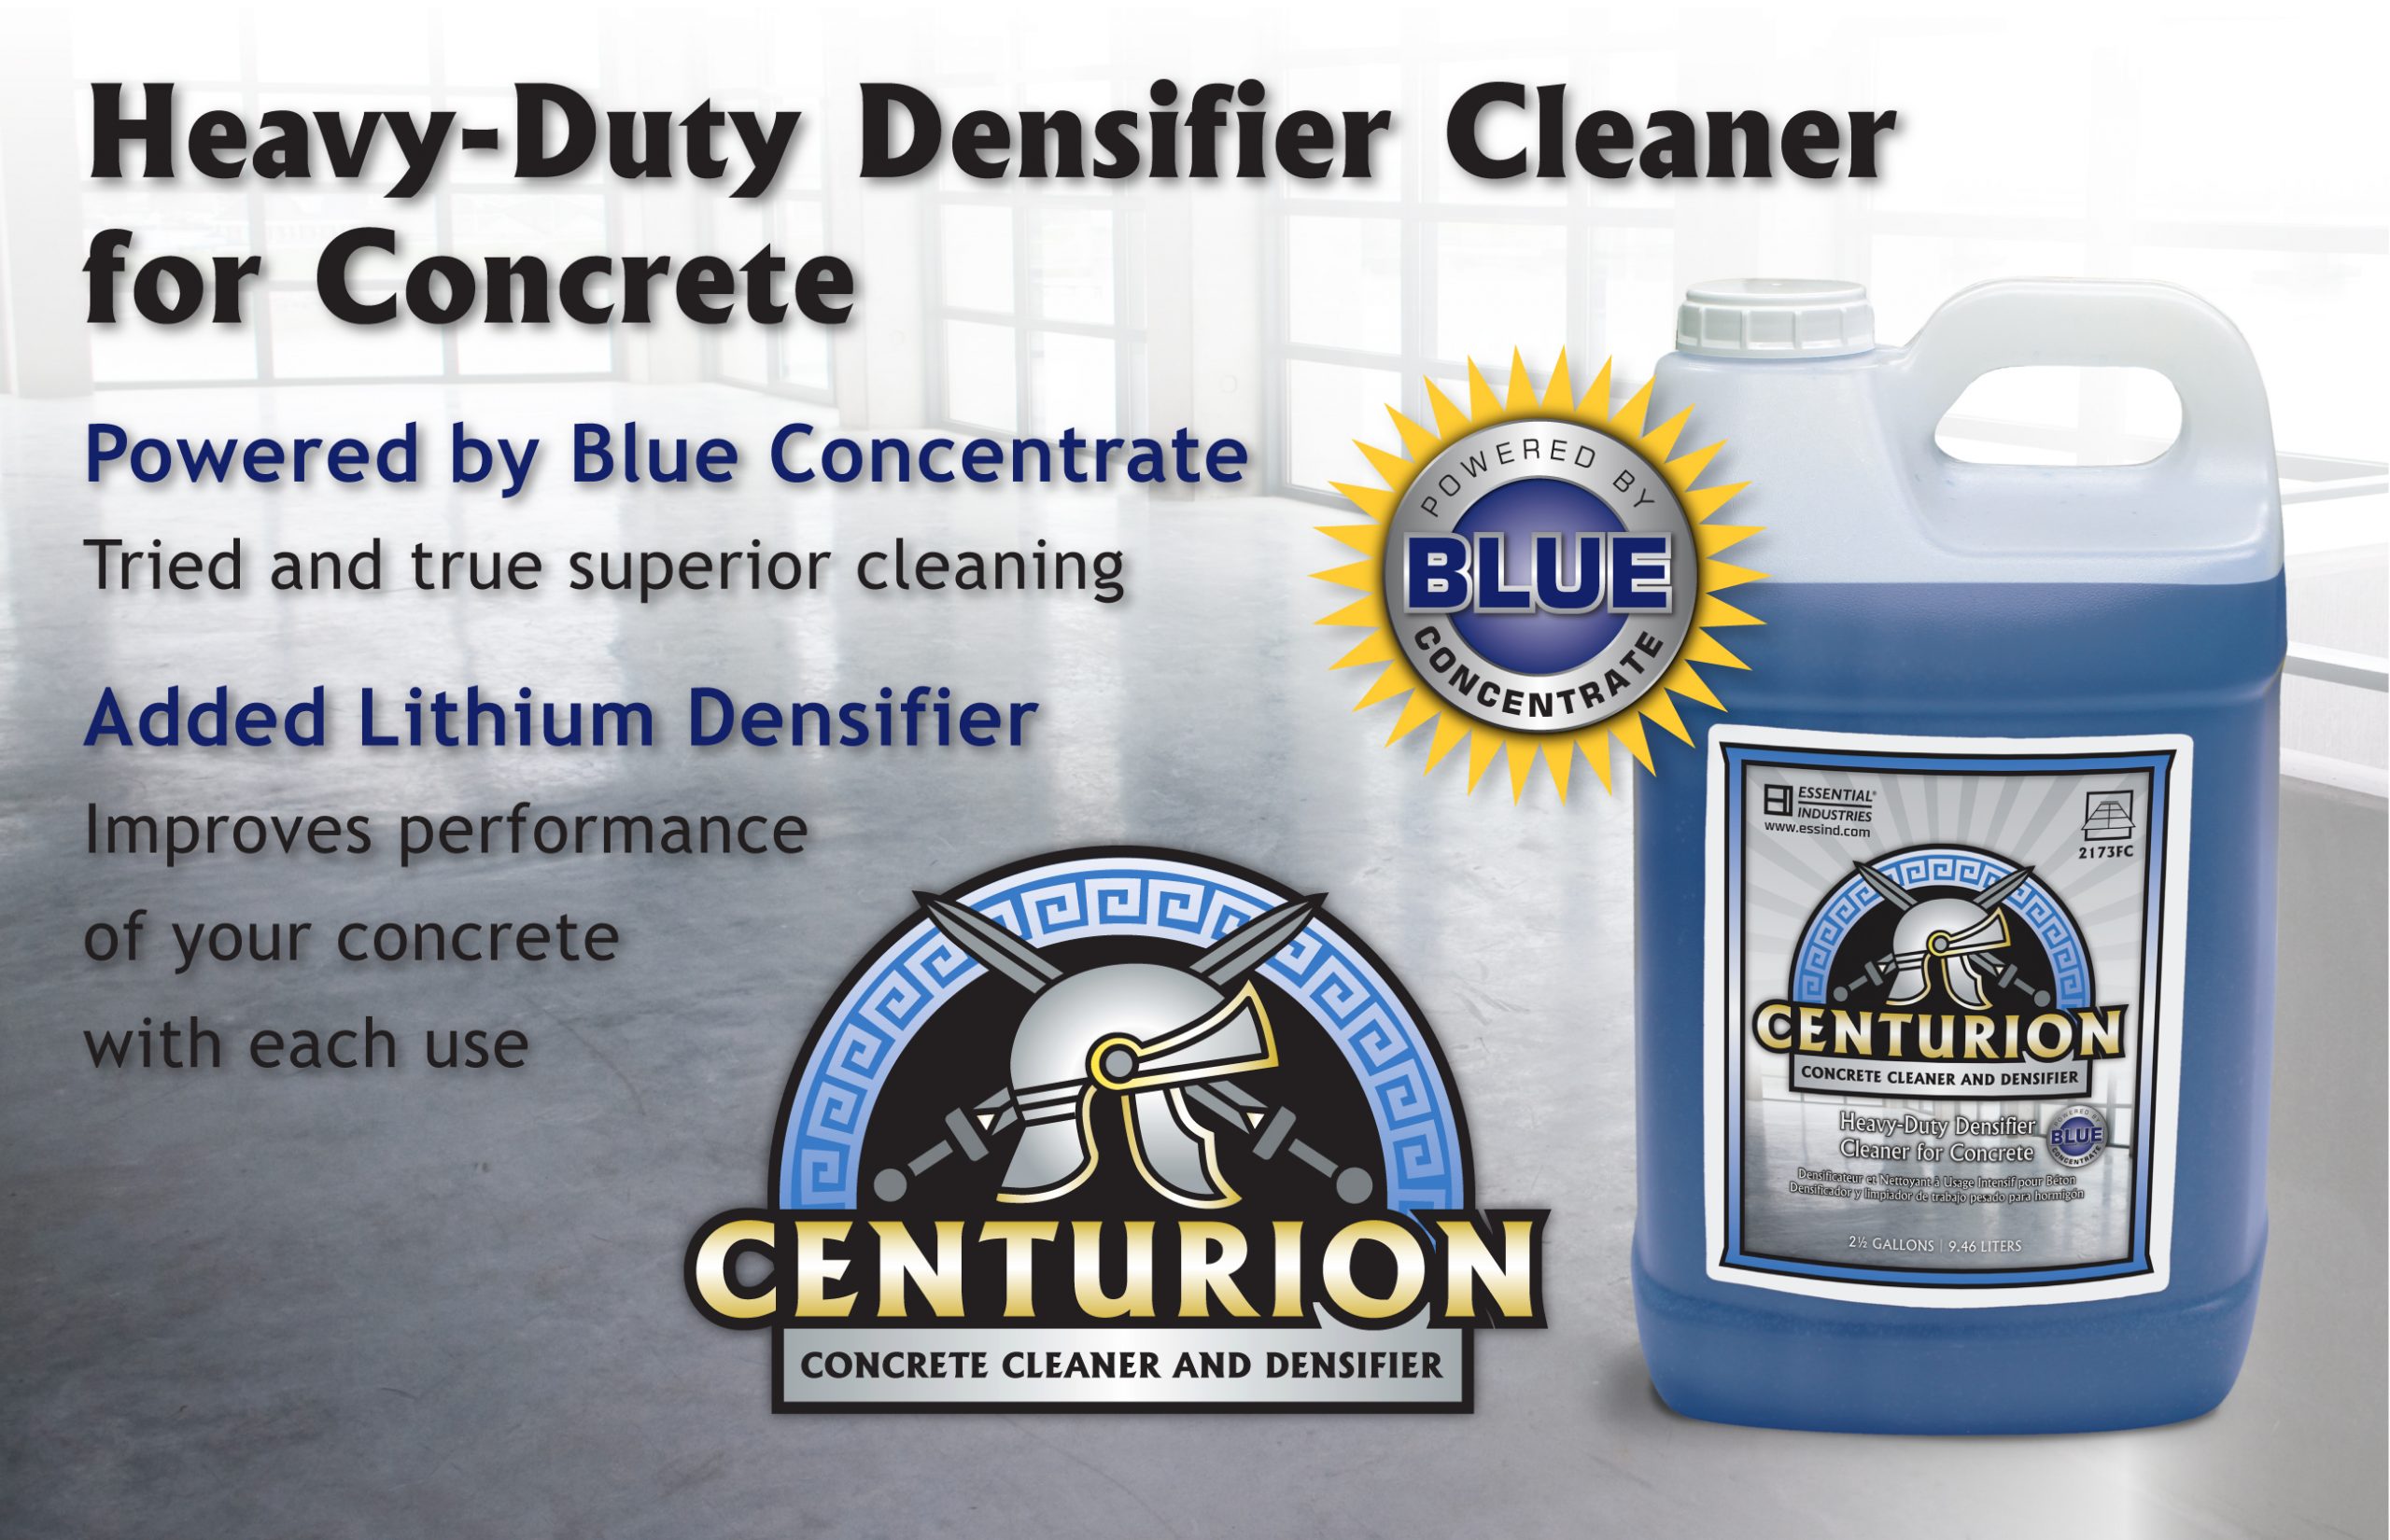 CENTURION, Heavy-Duty Densifier Cleaner for Concrete